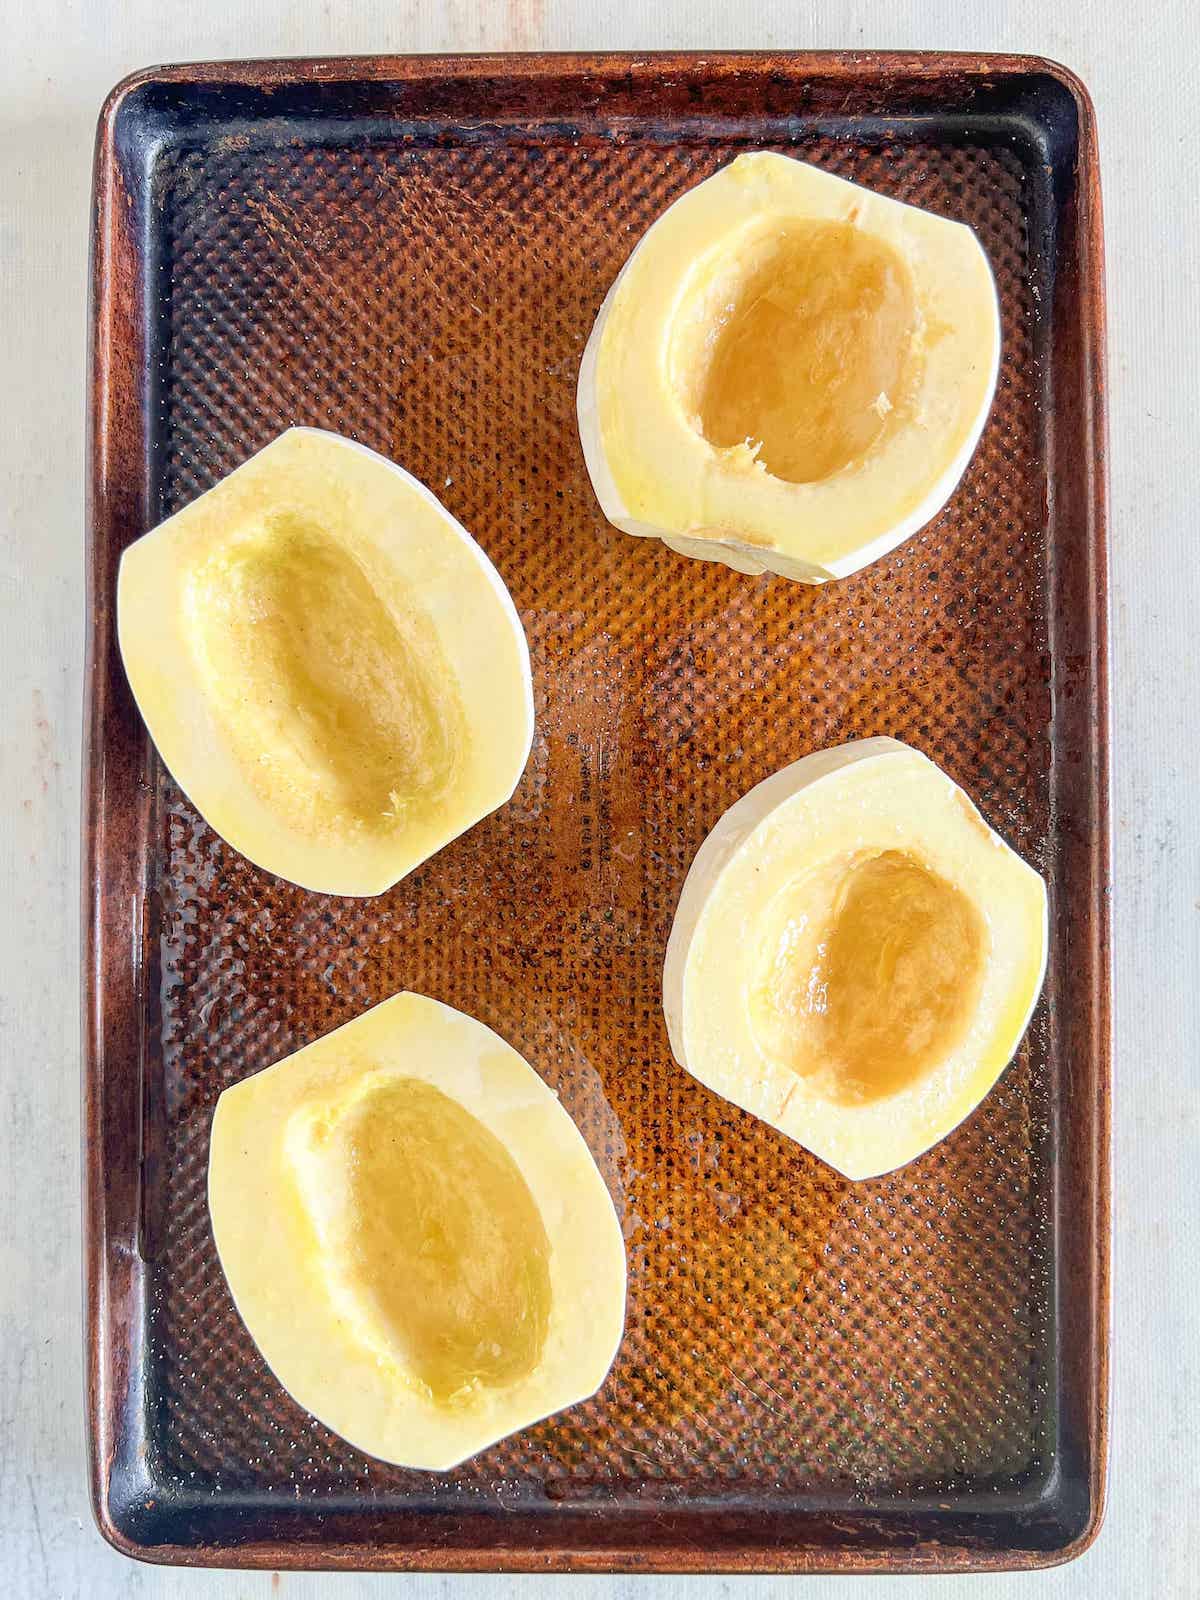 Mashed potato squash halves brushed with oil on a baking sheet.